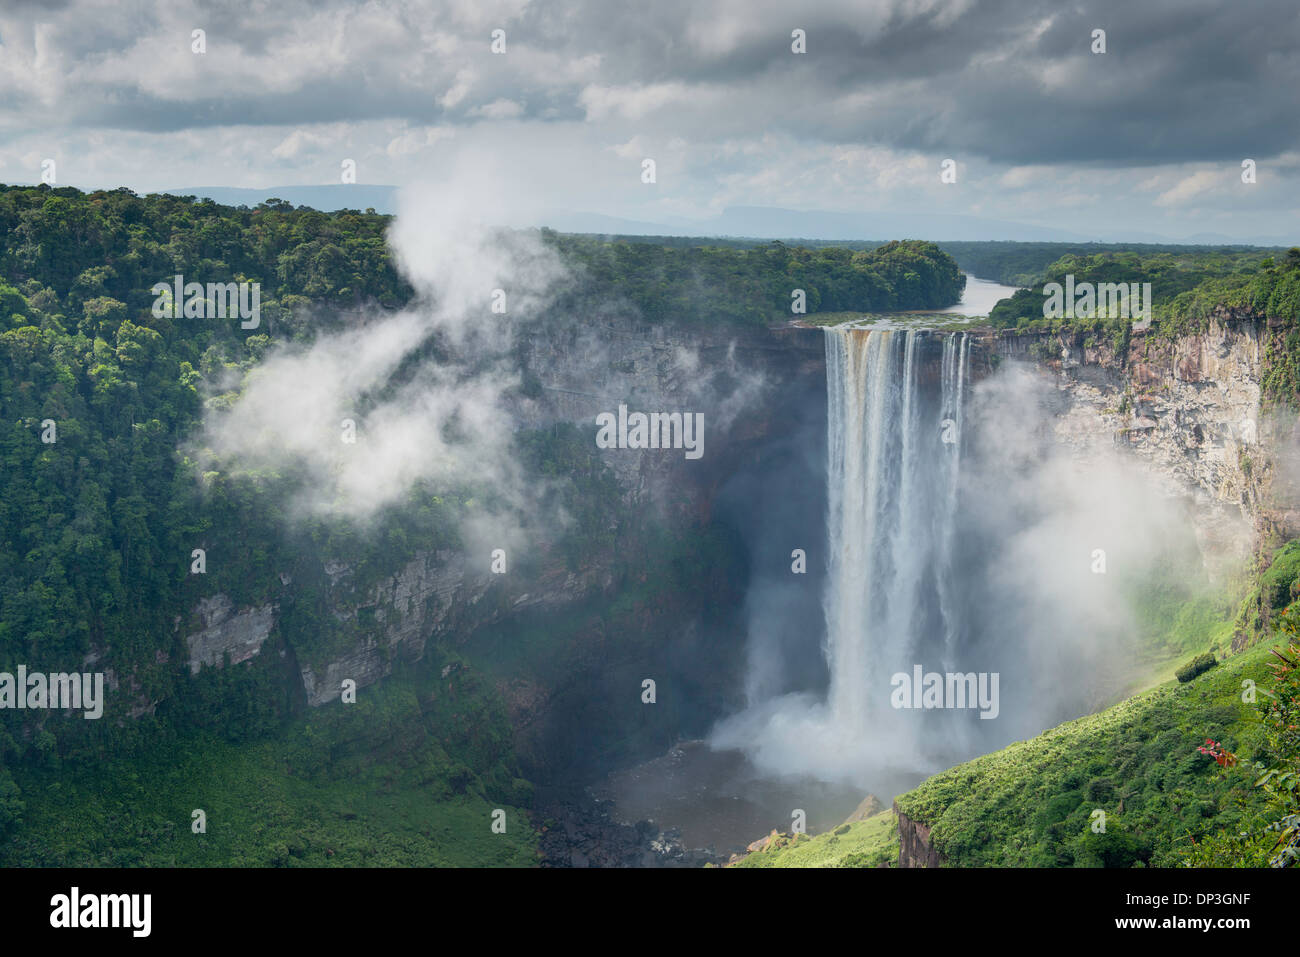 Kaieteur Falls, Kaieteur Parco Nazionale, Guyana, fiume di patate, combina un enorme volume di acqua con 822 foot drop Foto Stock